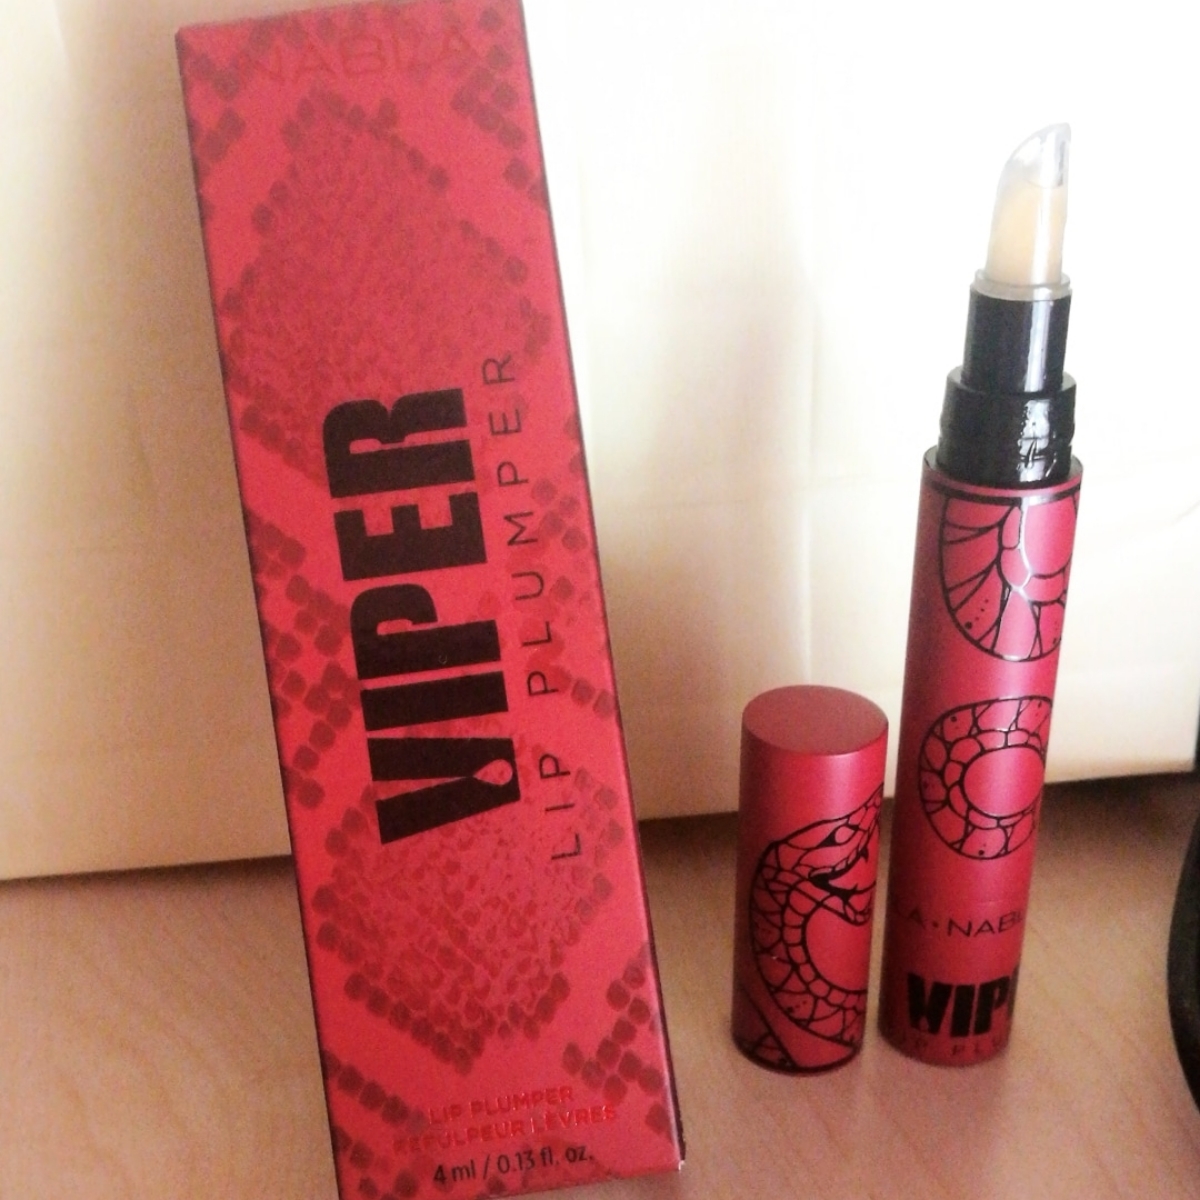 Nabla Cosmetics Viper lip Plumper Reviews | abillion